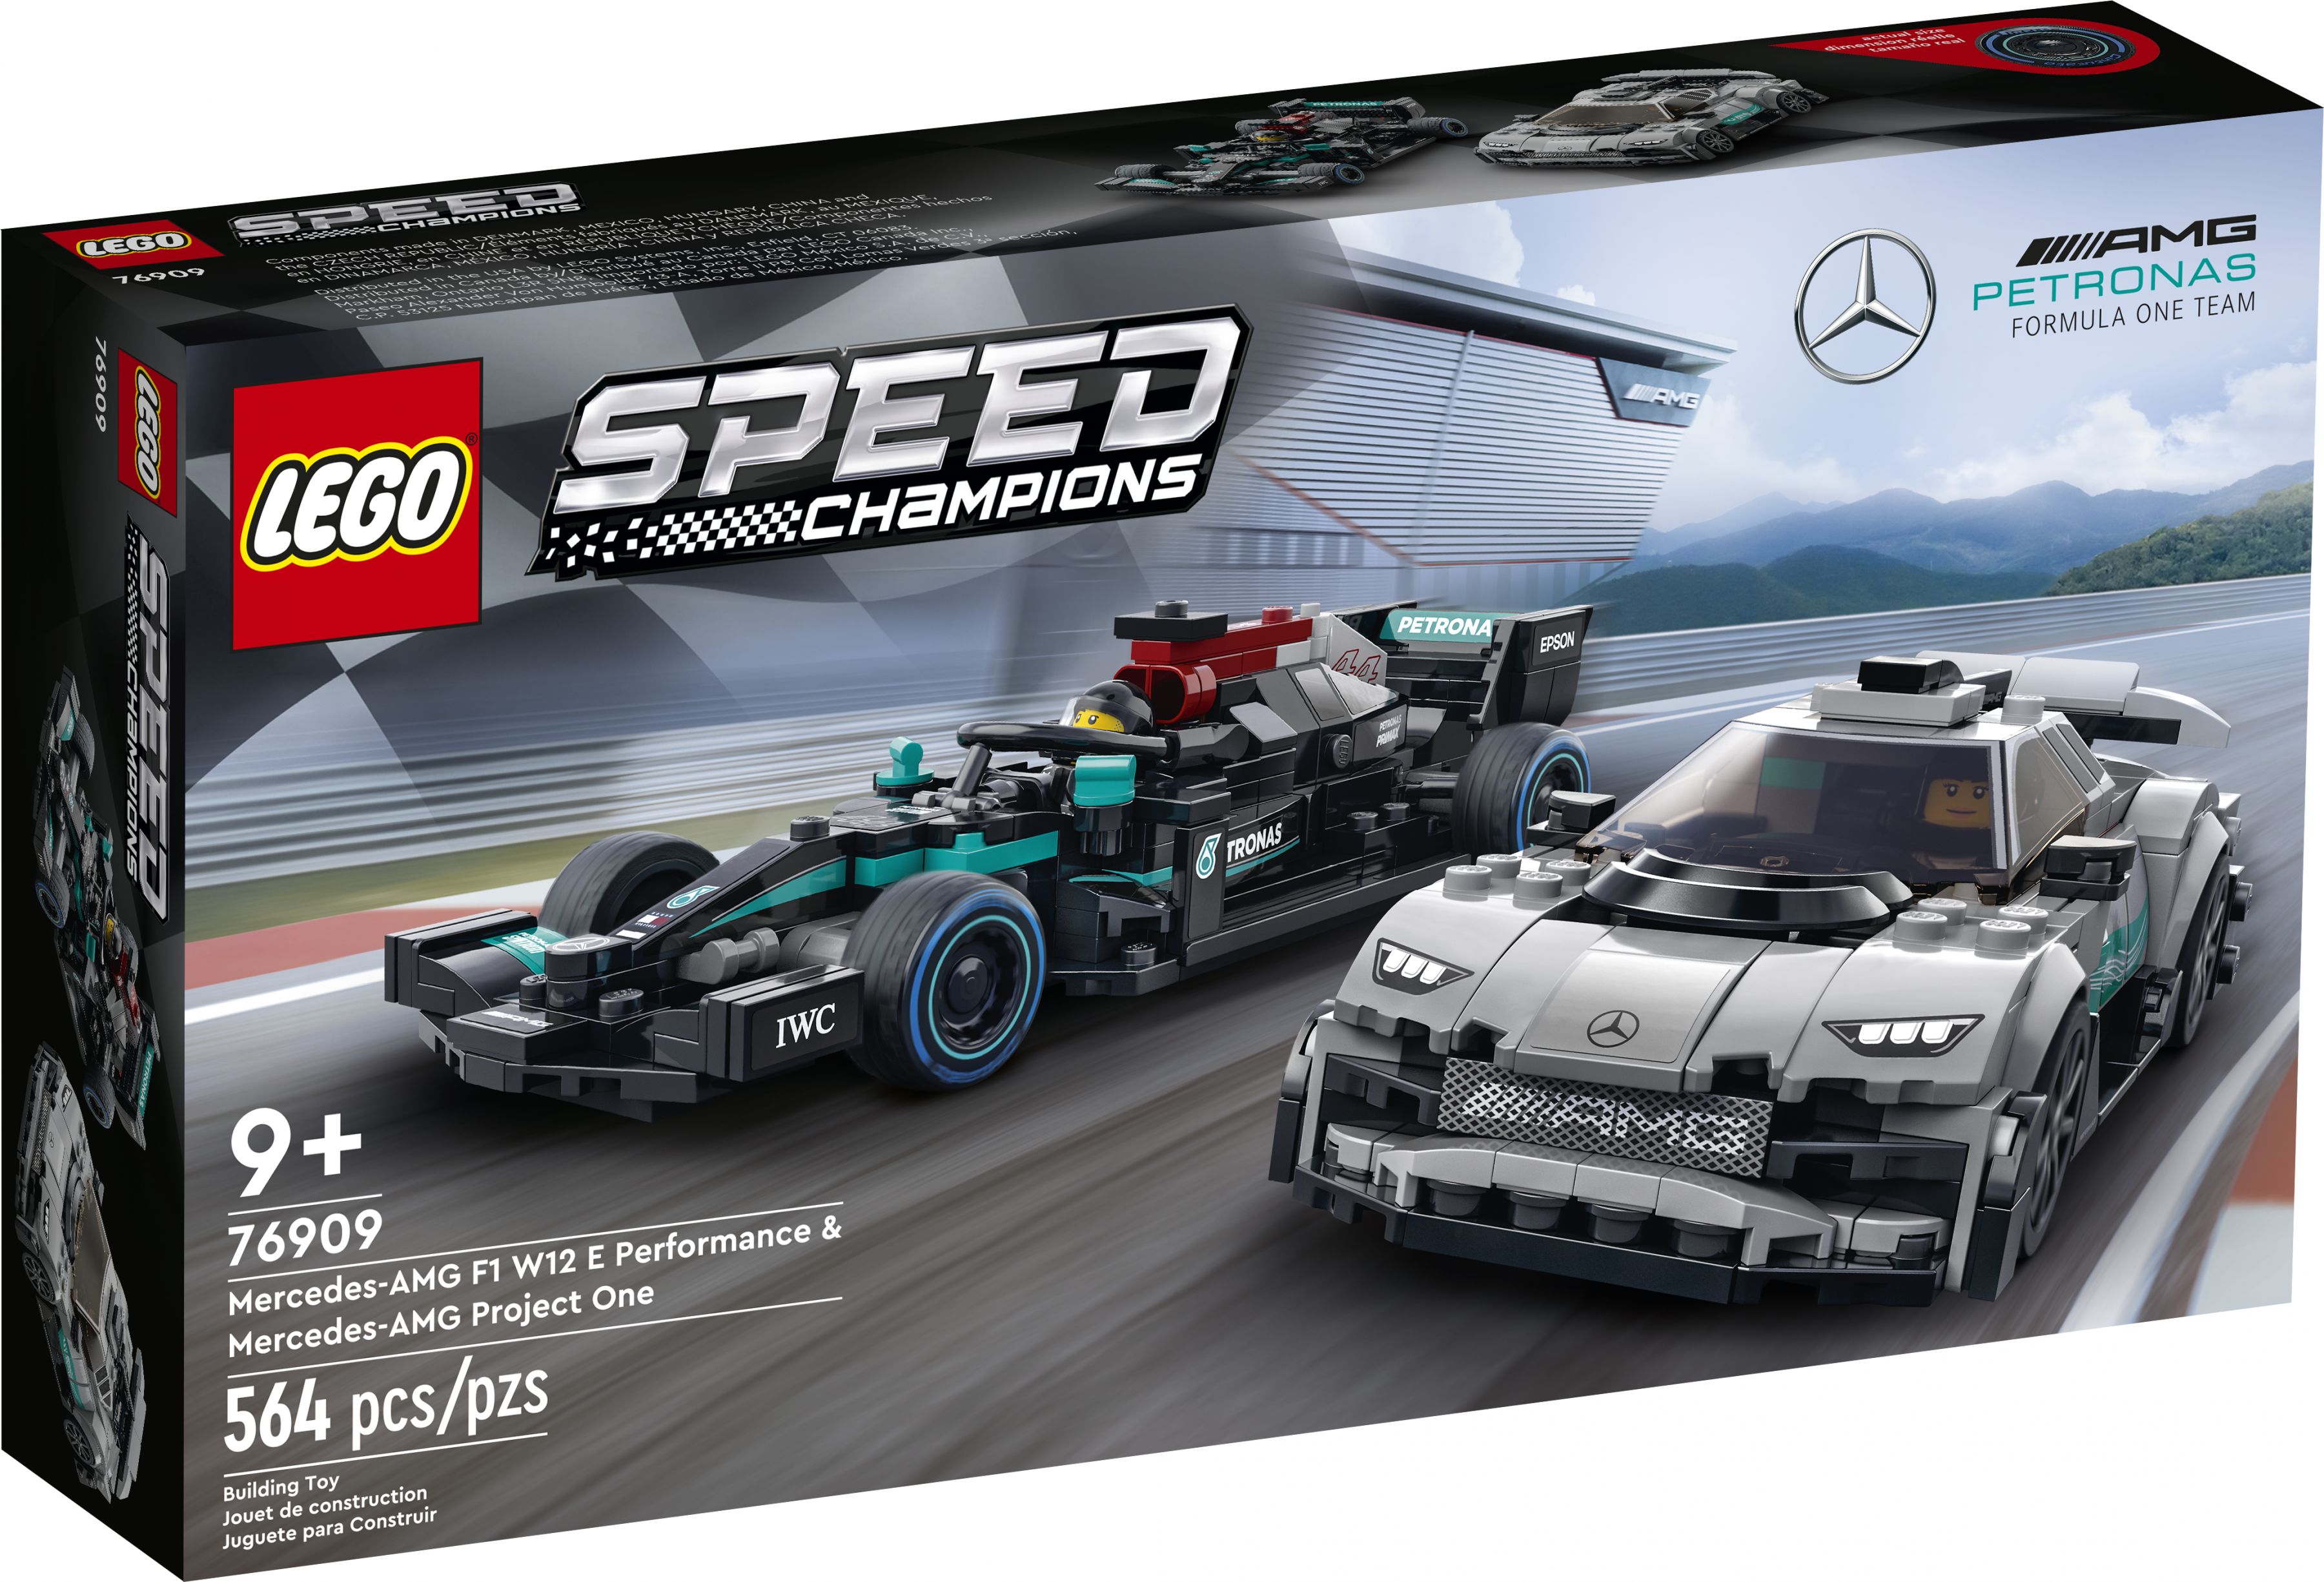 LEGO Speed Champions 76909 Mercedes-AMG F1 W12 E Performance & Mercedes-AMG Project One LEGO_76909_Box1_v39.jpg